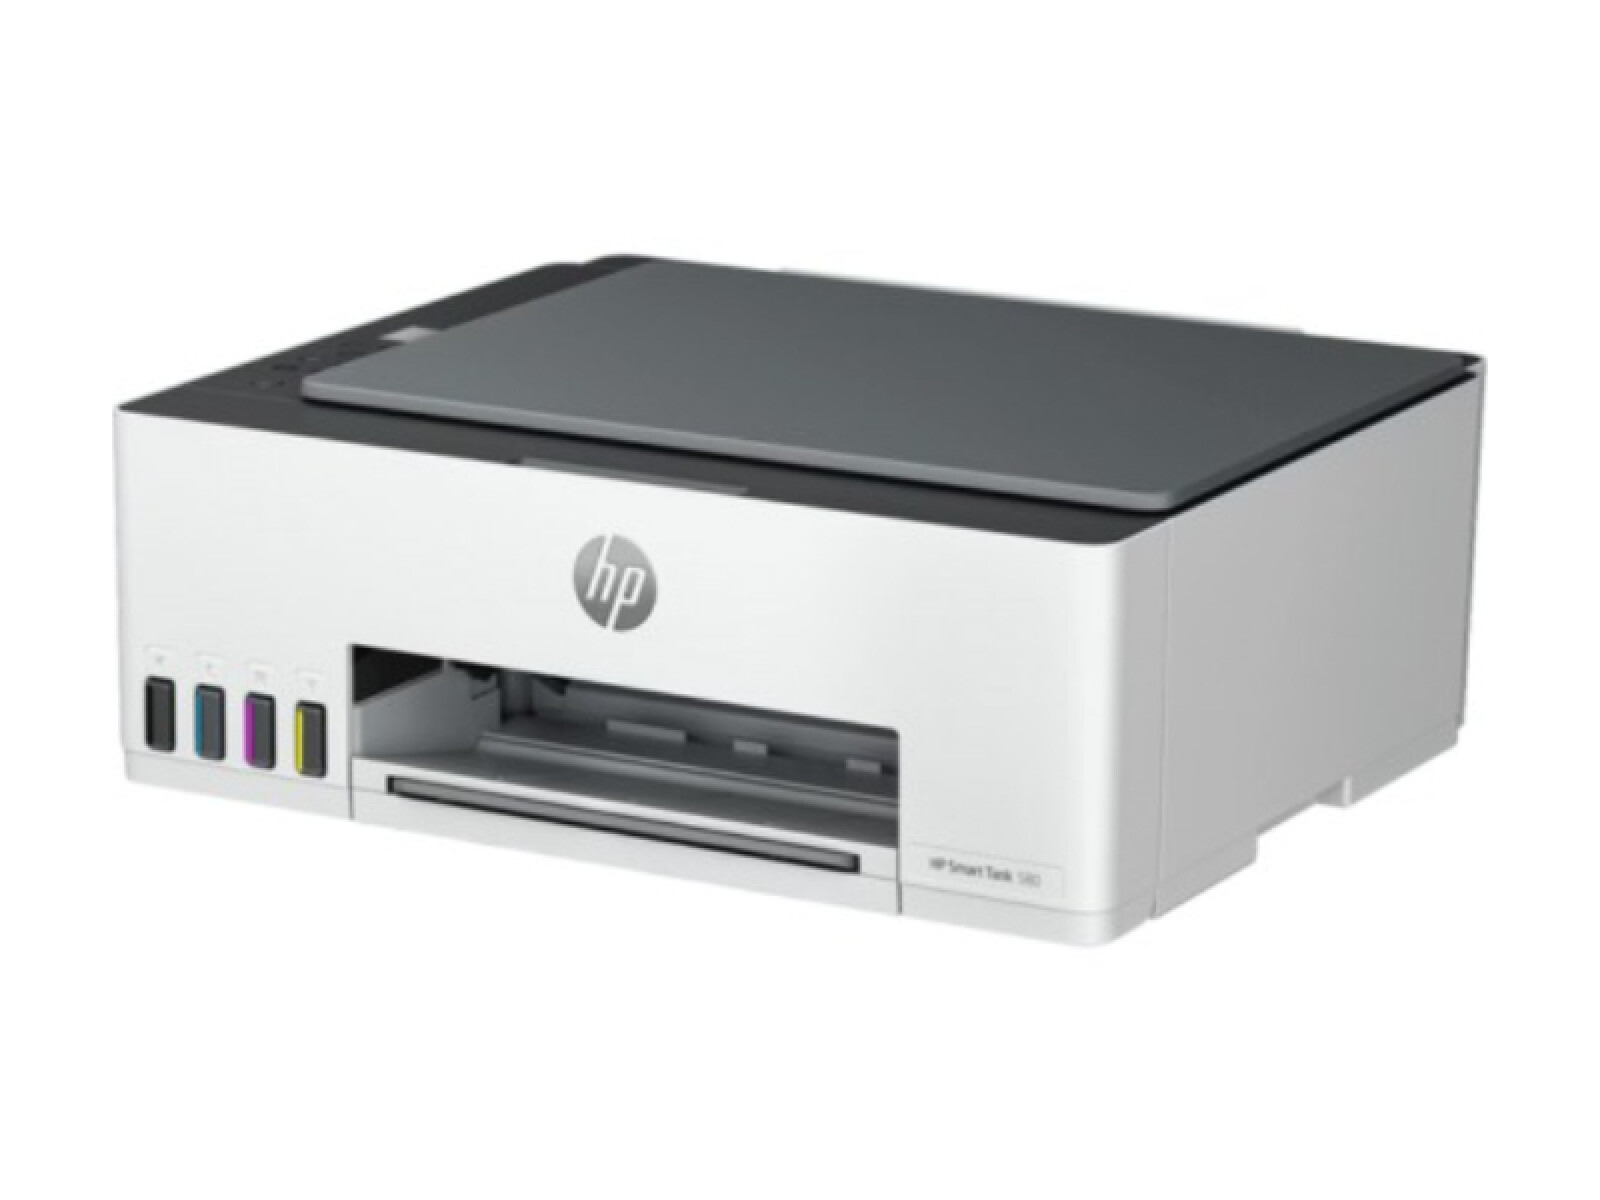 HP IMPRESORA SMART TANK 580 1F3Y2A#AKY MULTIFUNCION INAL - Hp Impresora Smart Tank 580 1f3y2a#aky Multifuncion Inal 